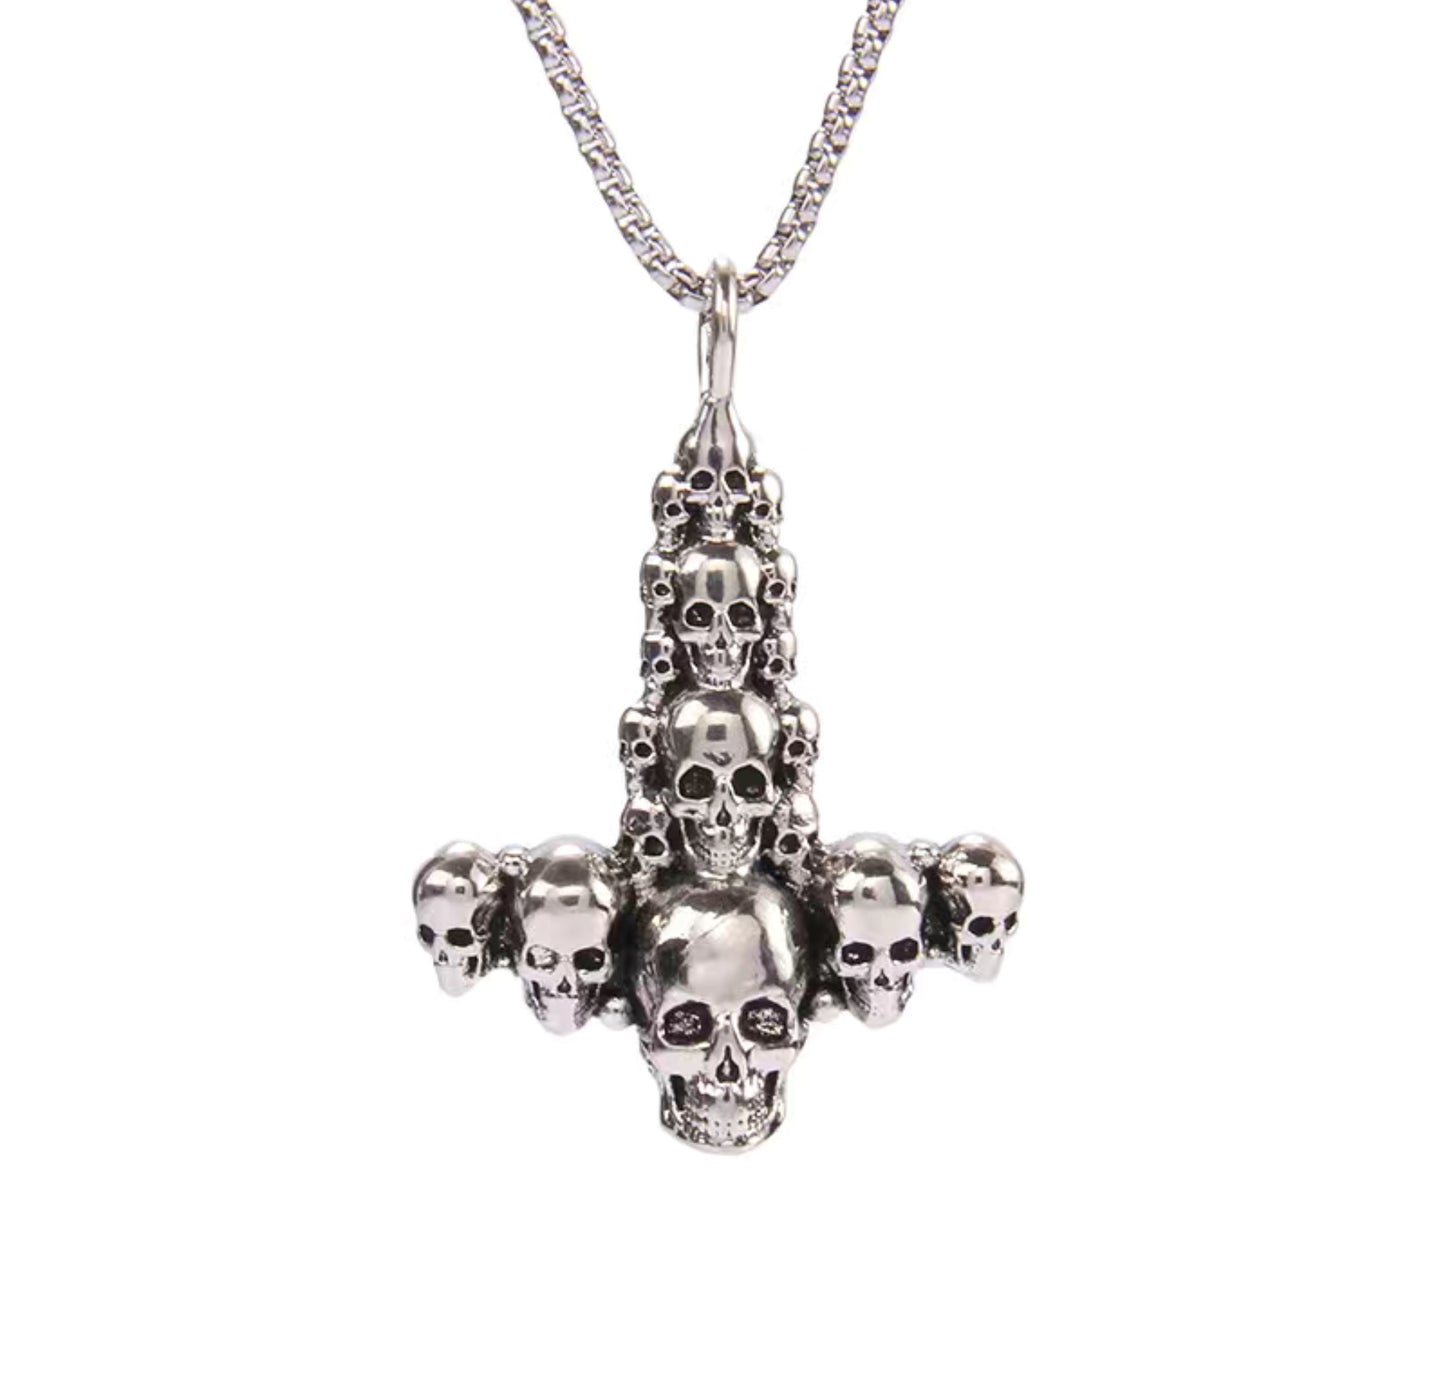 Inverted Skull Cross Pendant Necklace